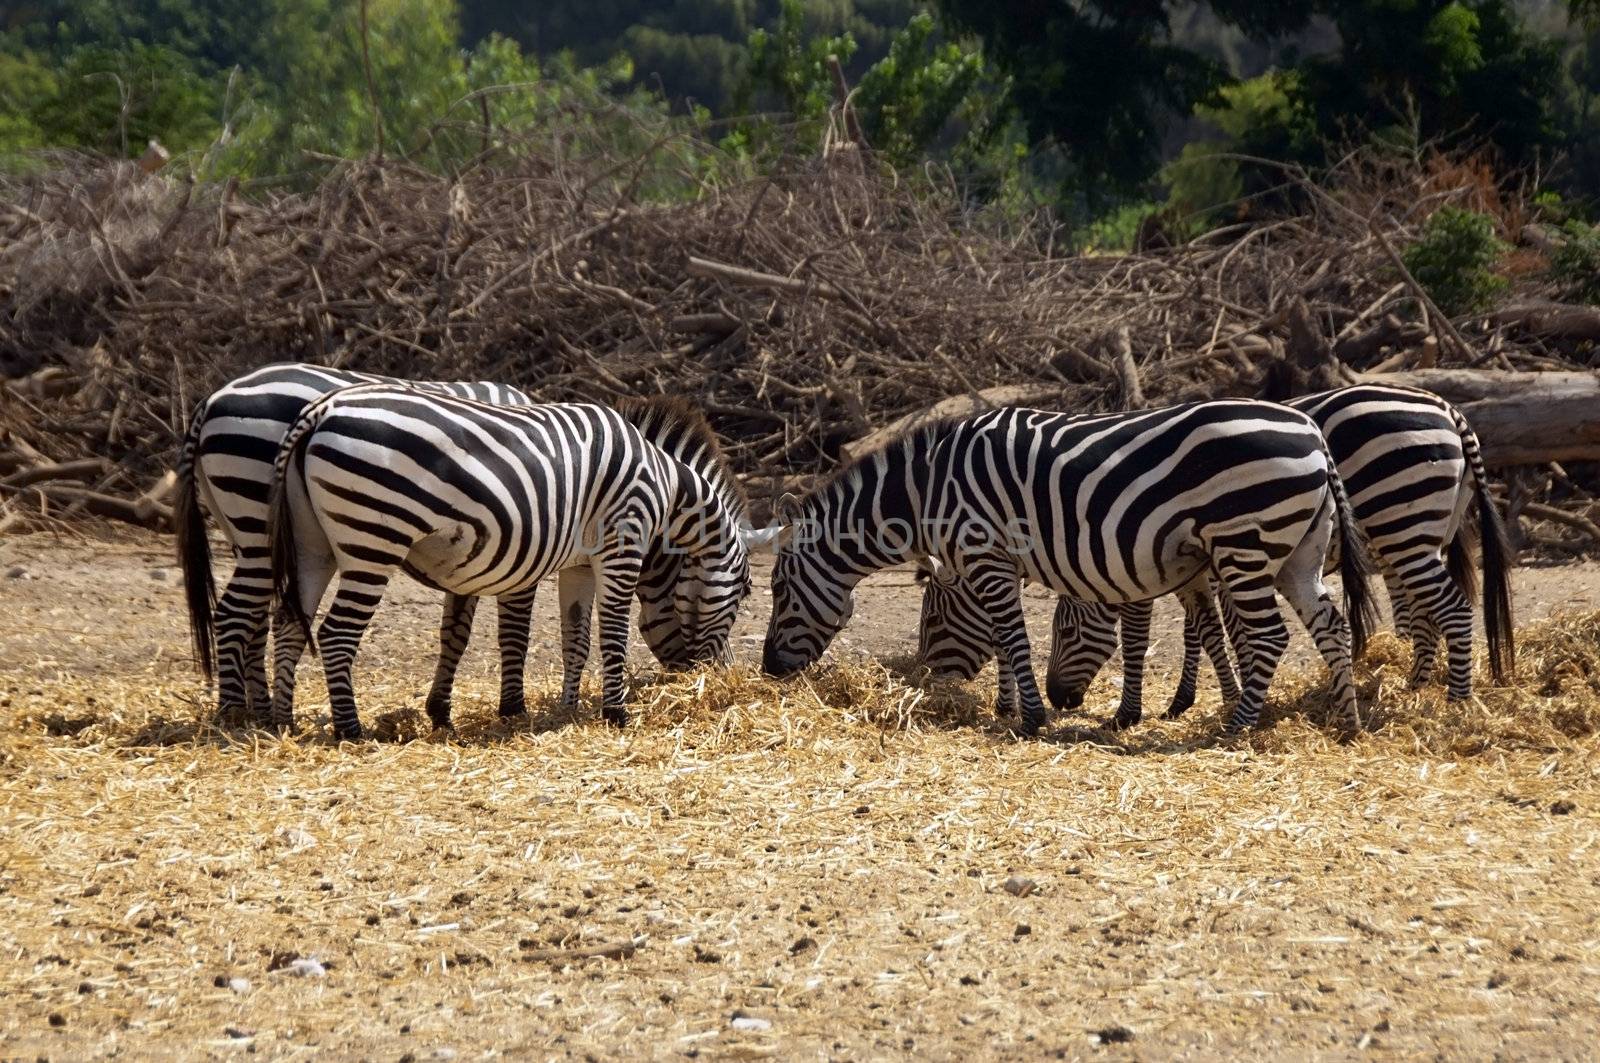 group of zebras grazing in a safari